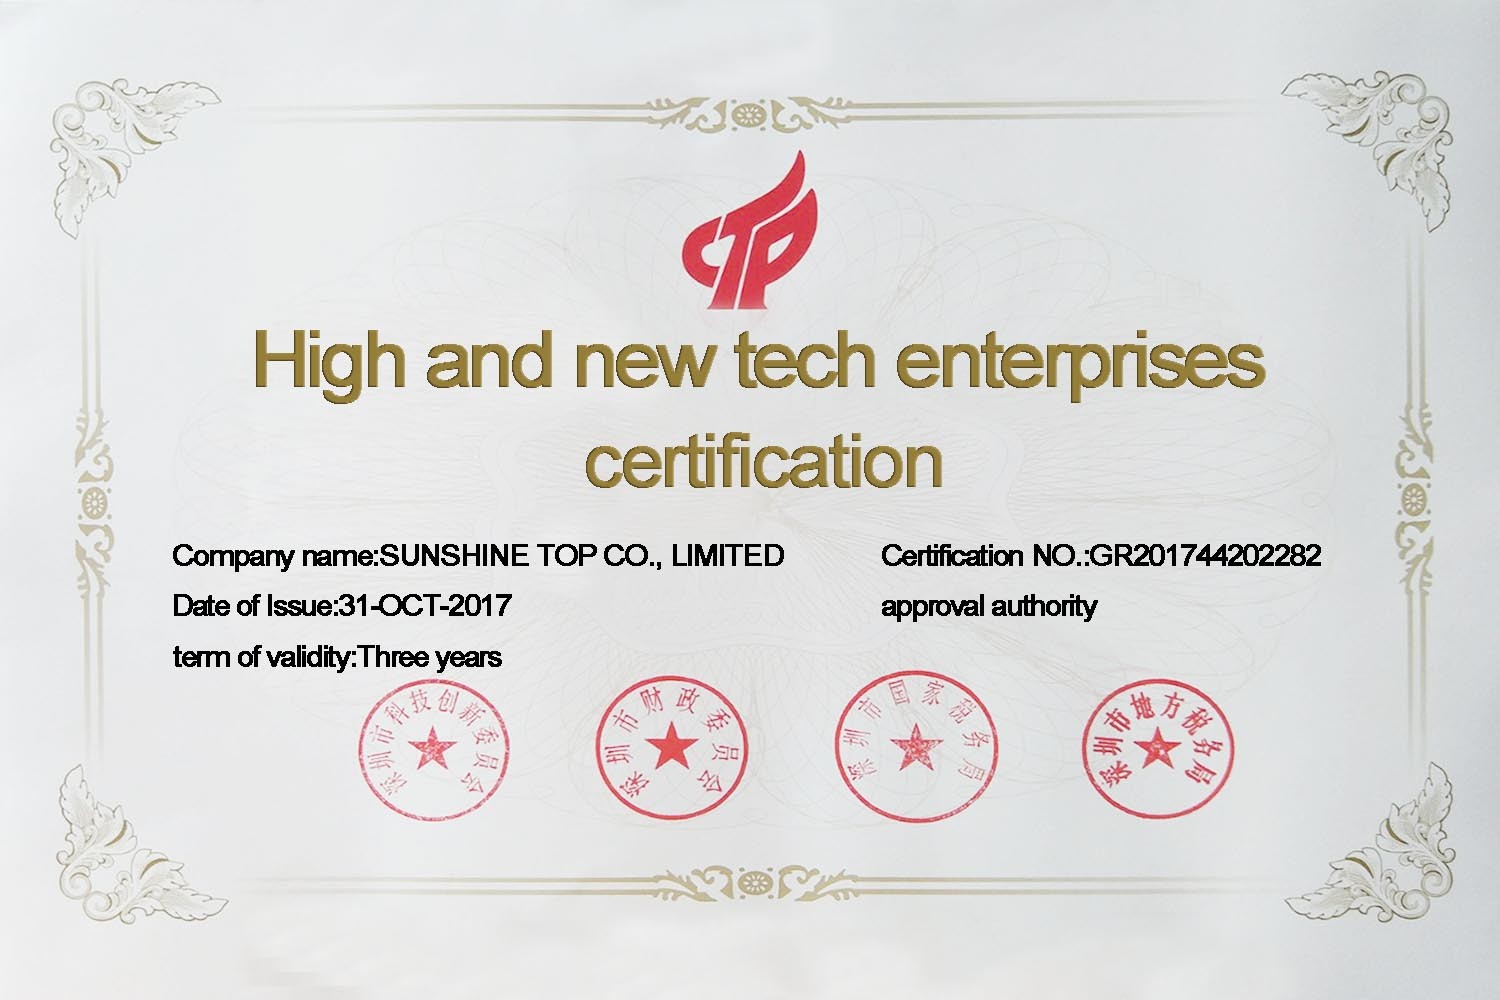 National Hi-Tech Enterprises certification